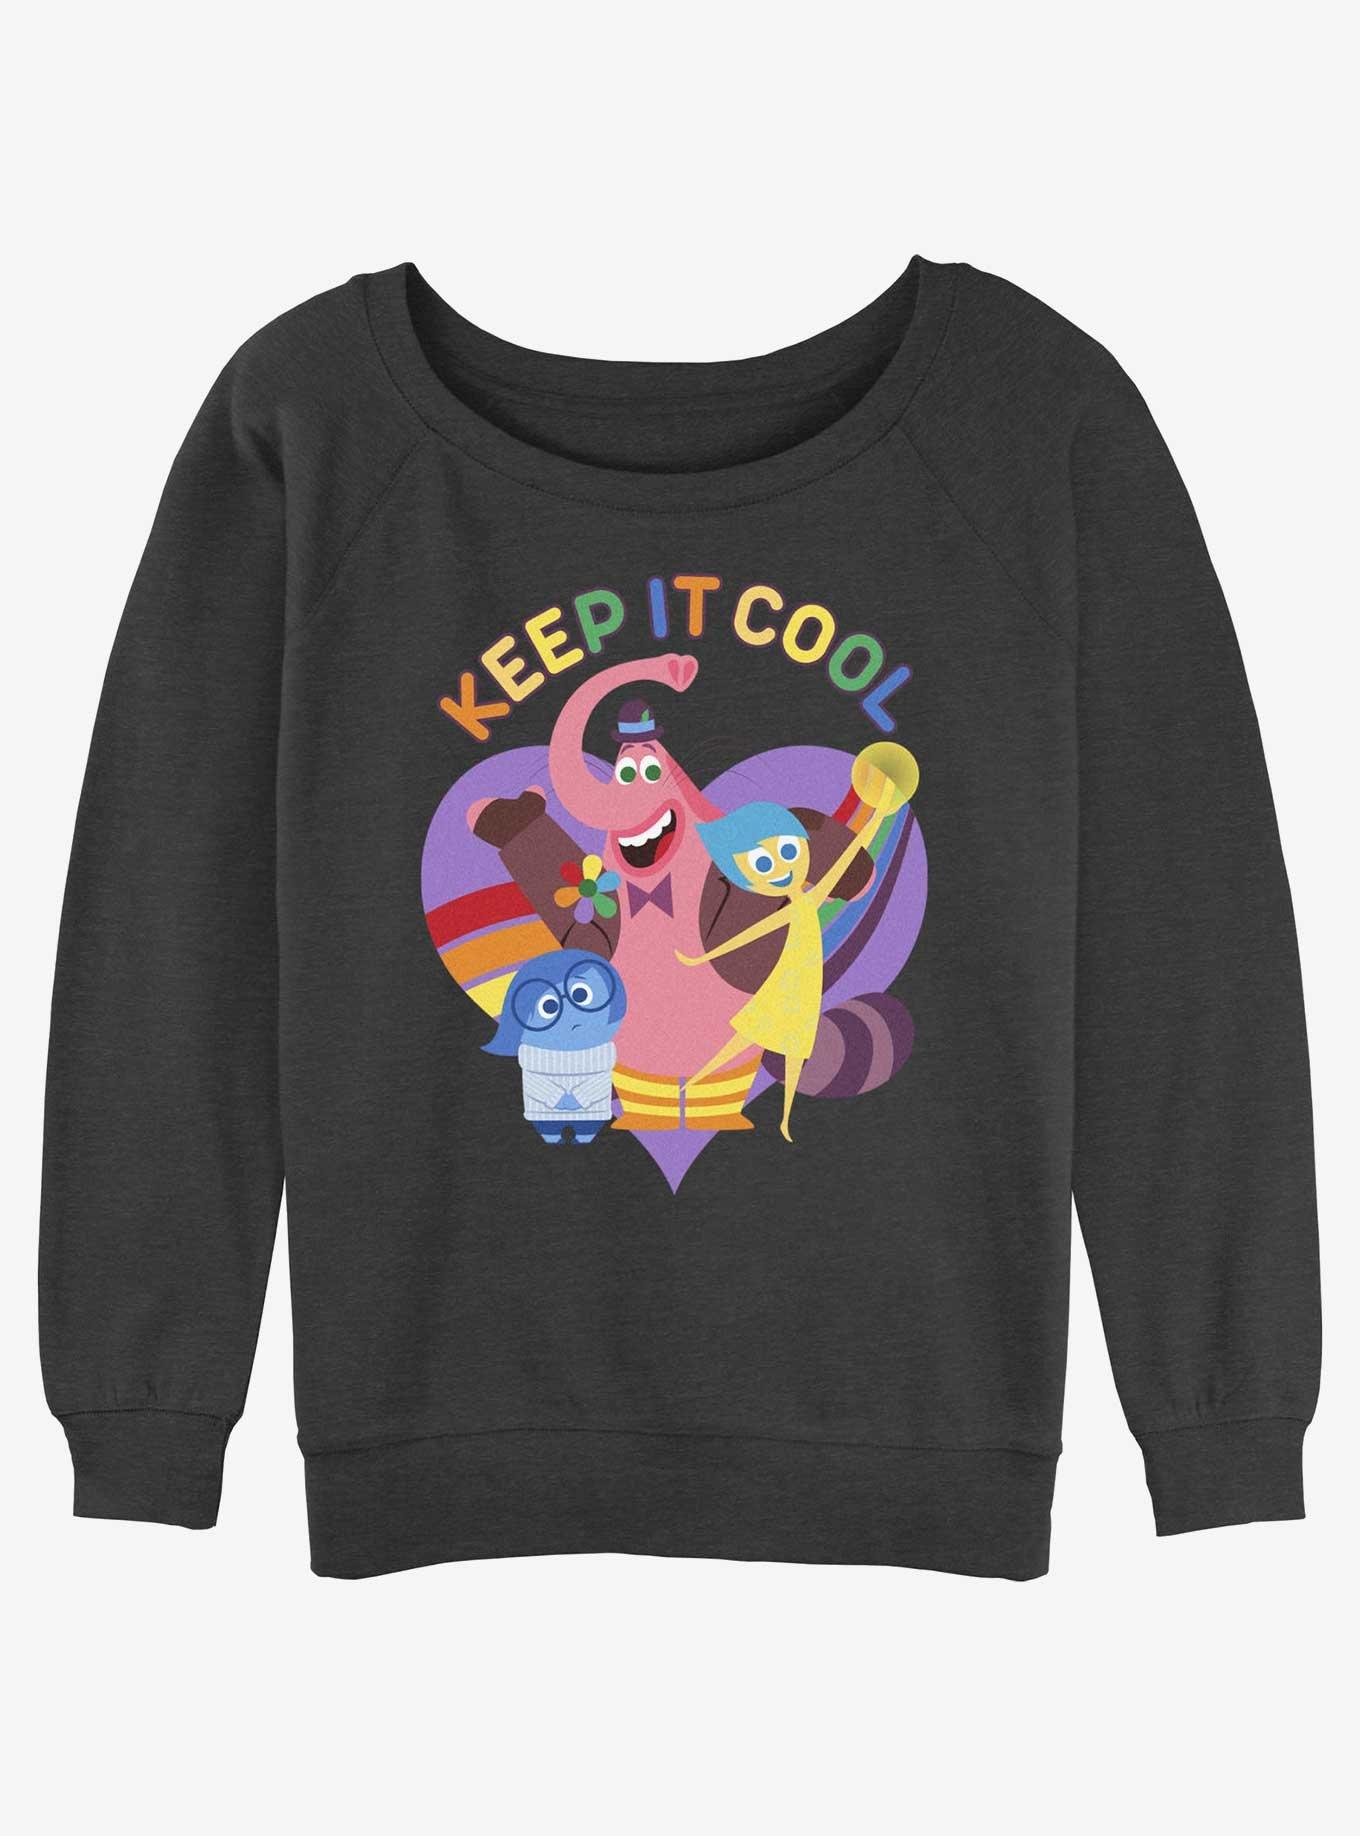 Disney Pixar Inside Out 2 Keep It Cool Womens Slouchy Sweatshirt, CHAR HTR, hi-res